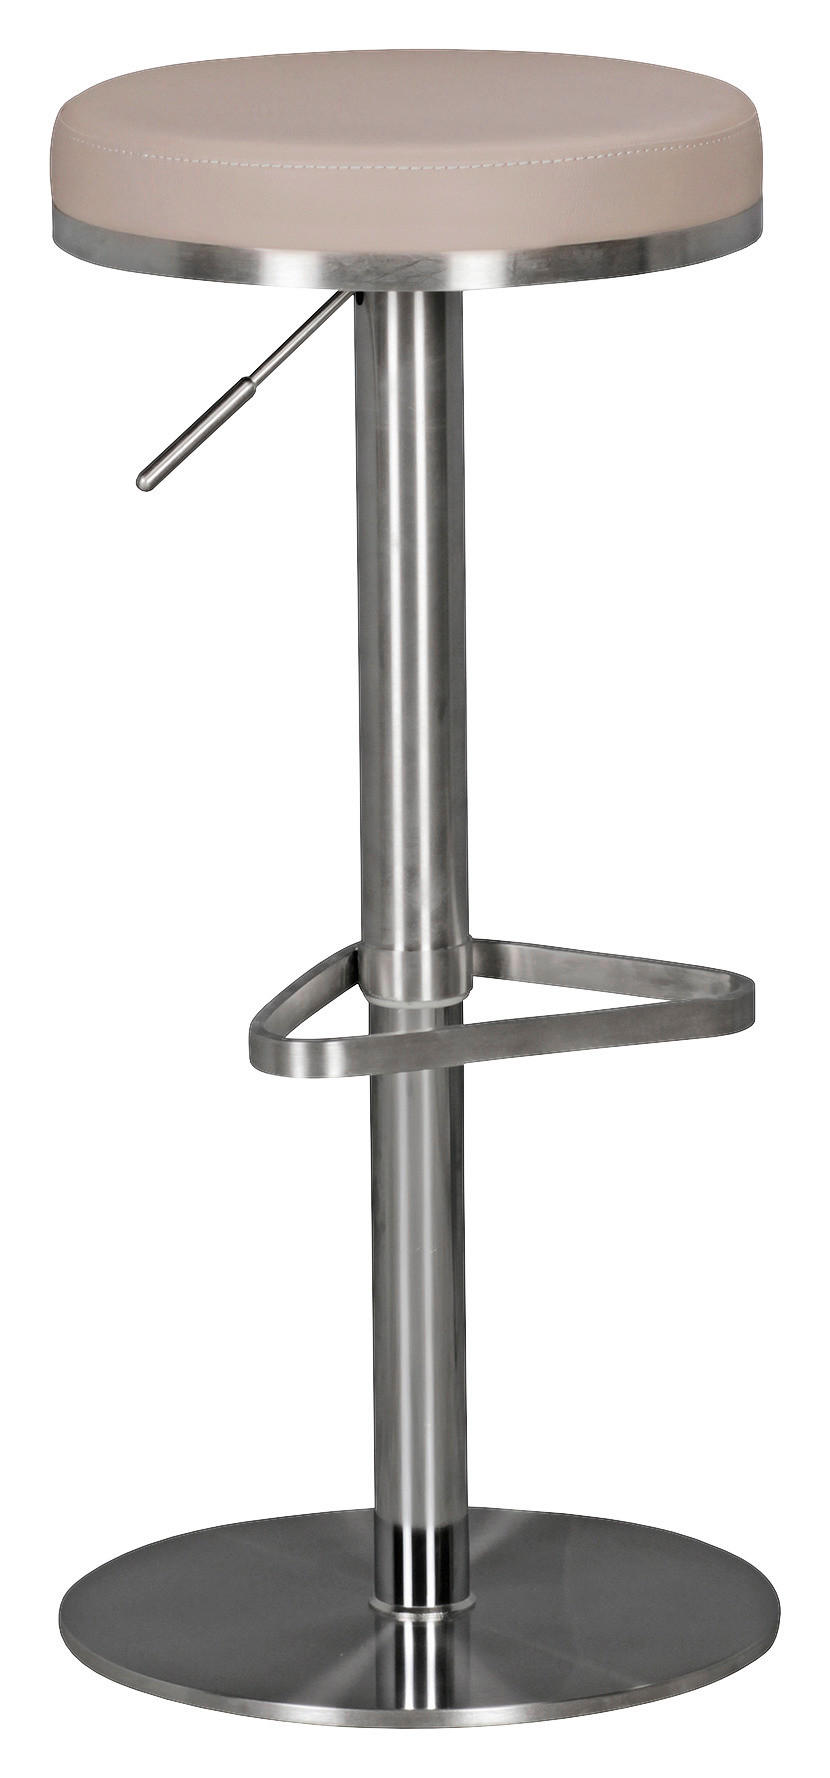 BARHOCKER Taupe Sitzfläche 360° drehbar  - Taupe/Silberfarben, MODERN, Textil/Metall (38/57/38cm) - MID.YOU